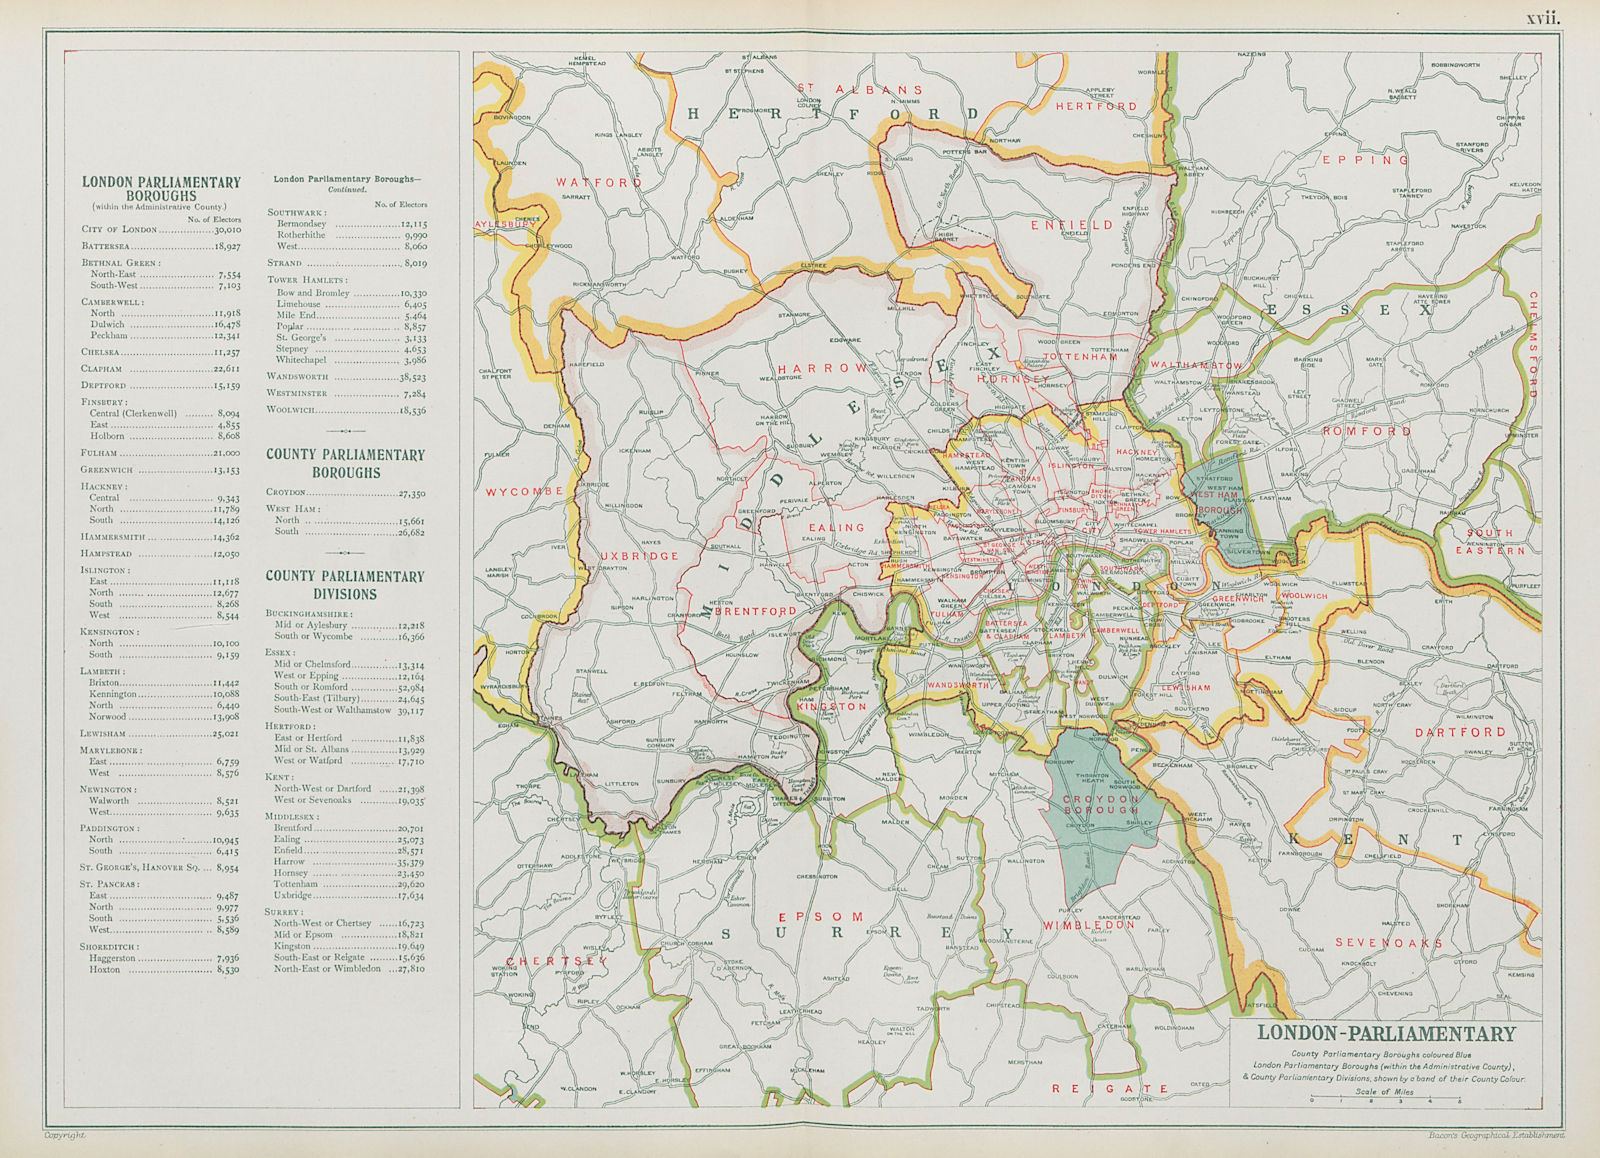 GREATER LONDON PARLIAMENTARY. Constituencies Boroughs # electors. BACON 1913 map